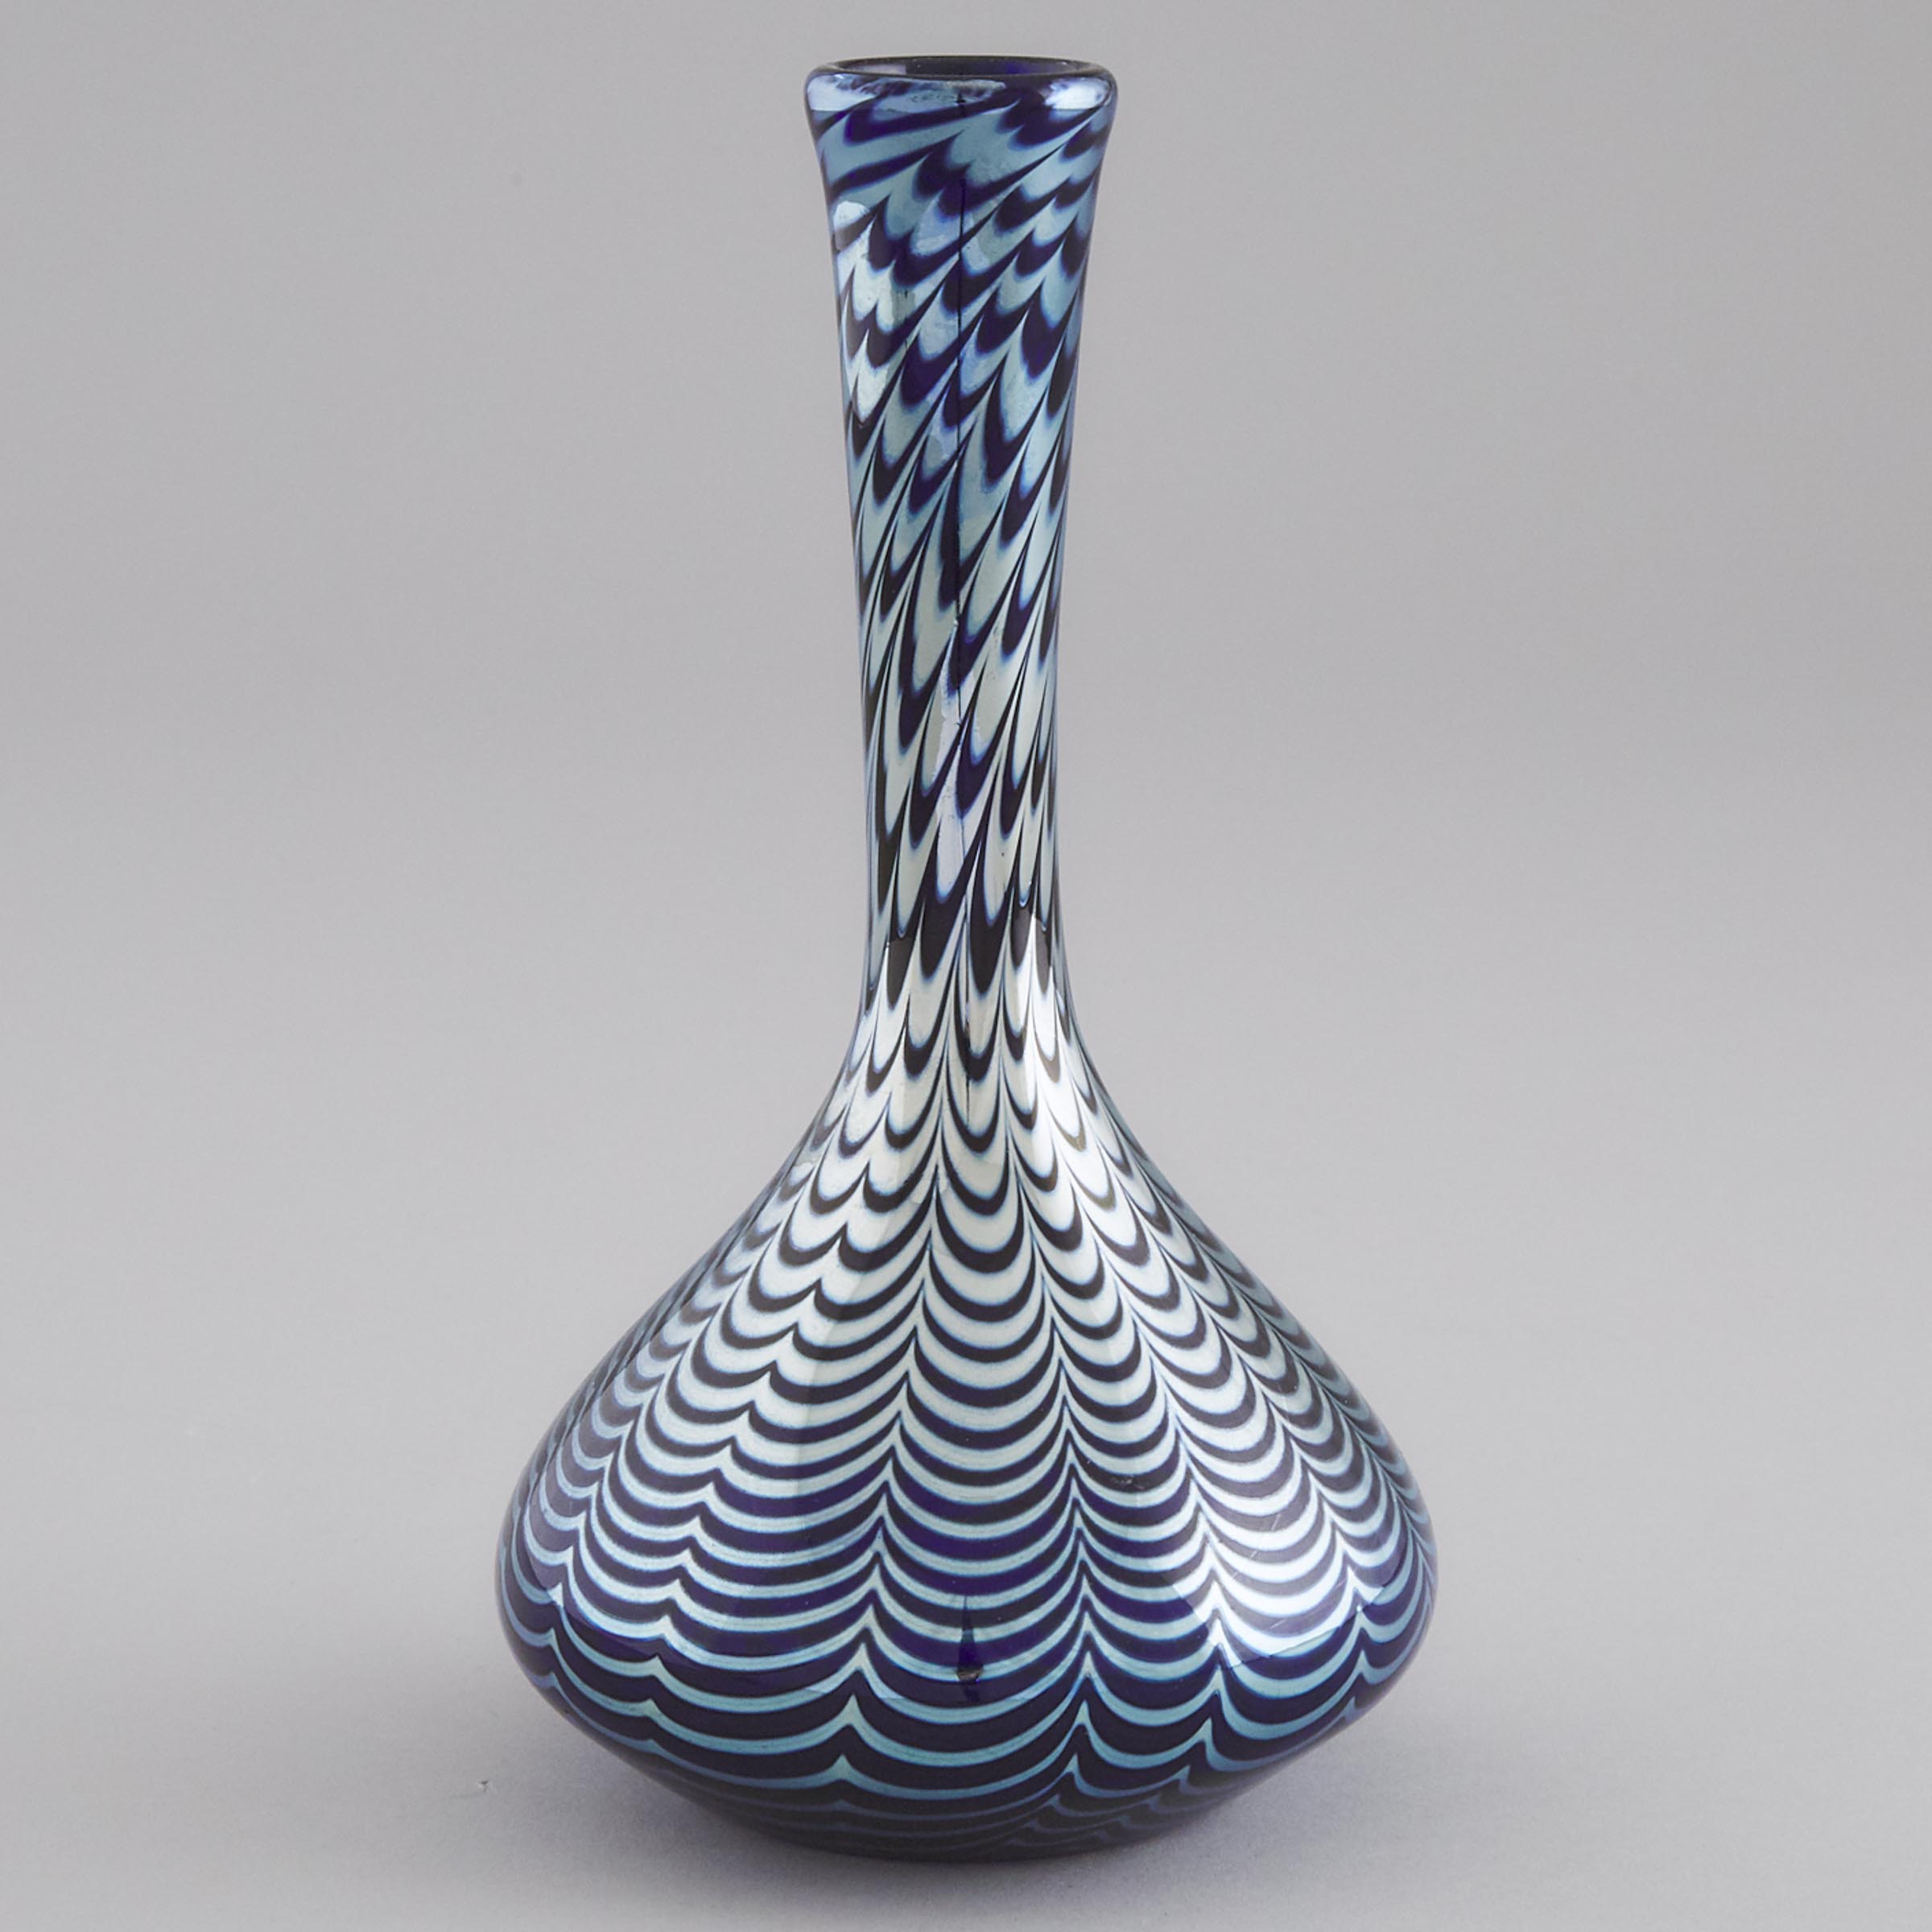 Studio Glass Vase, late 20th century